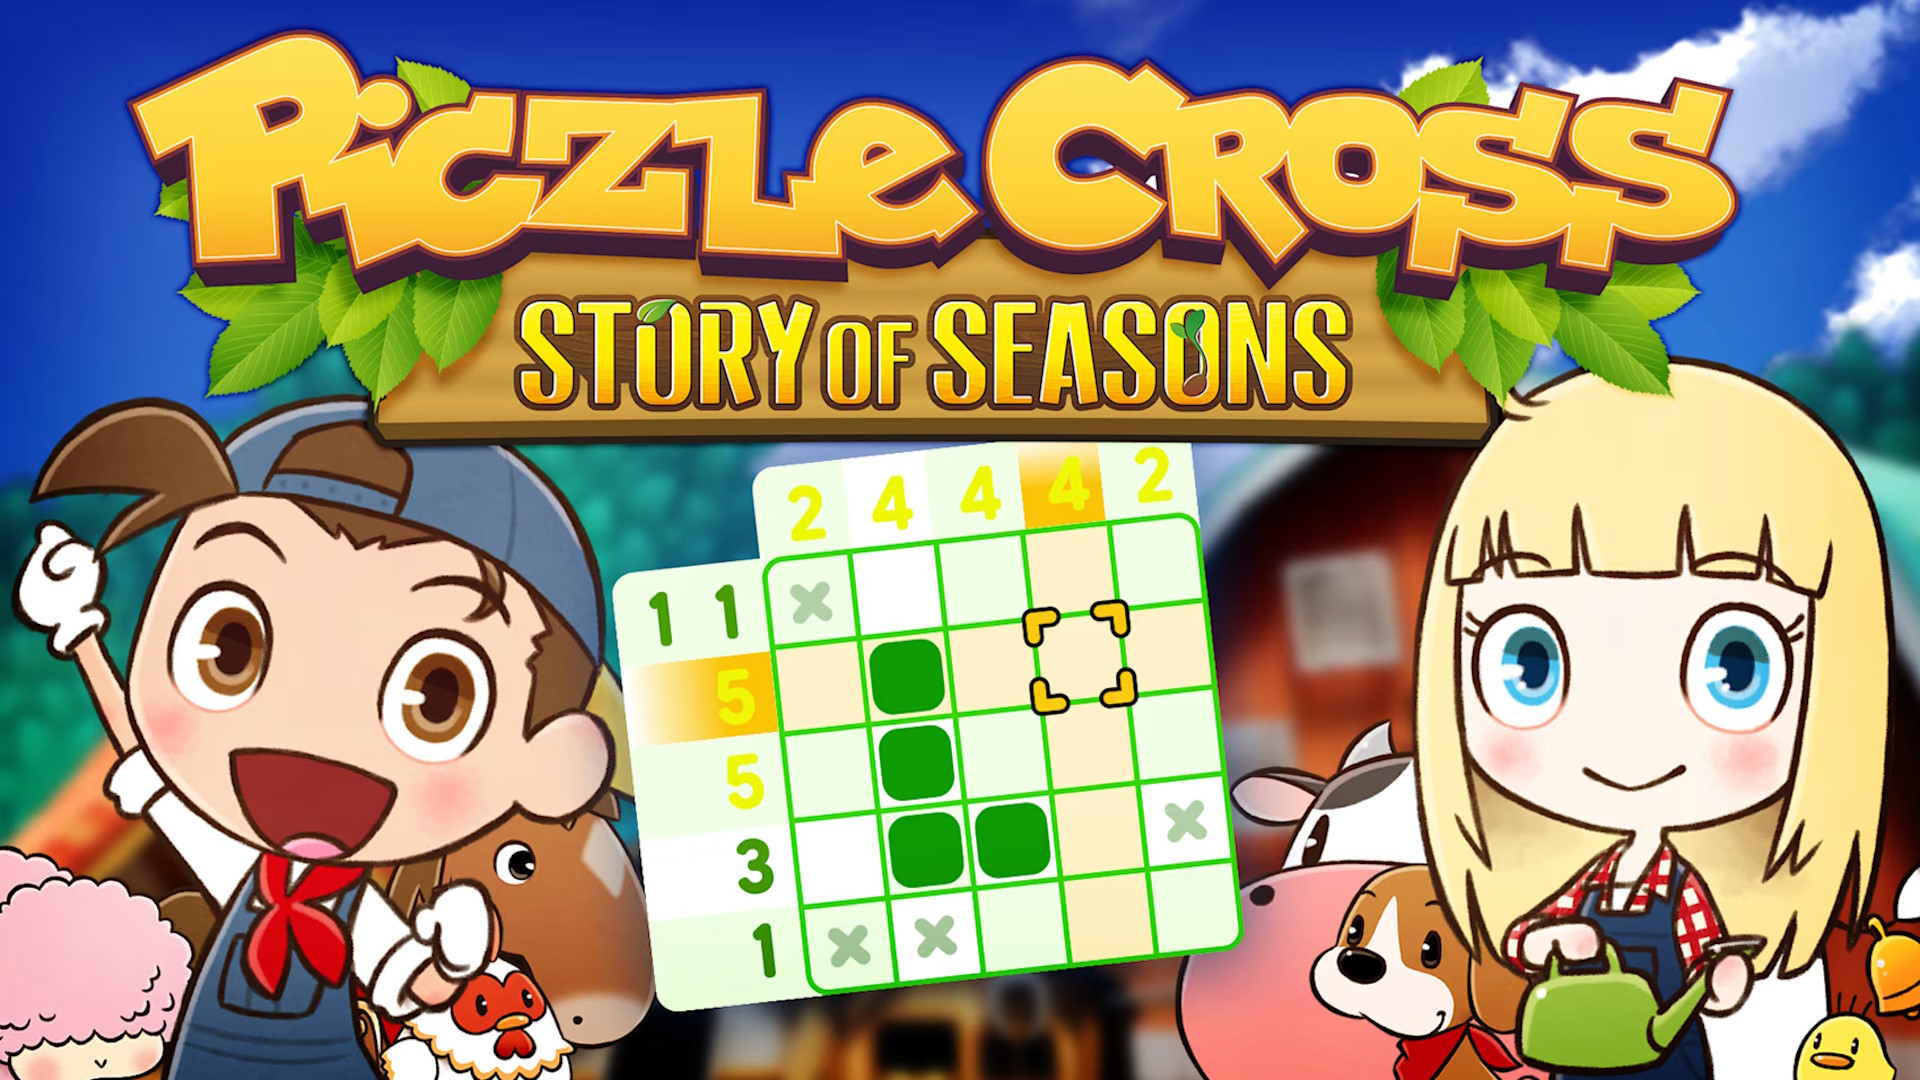 Piczle Cross Story of Seasons logo alongside the two main characters.